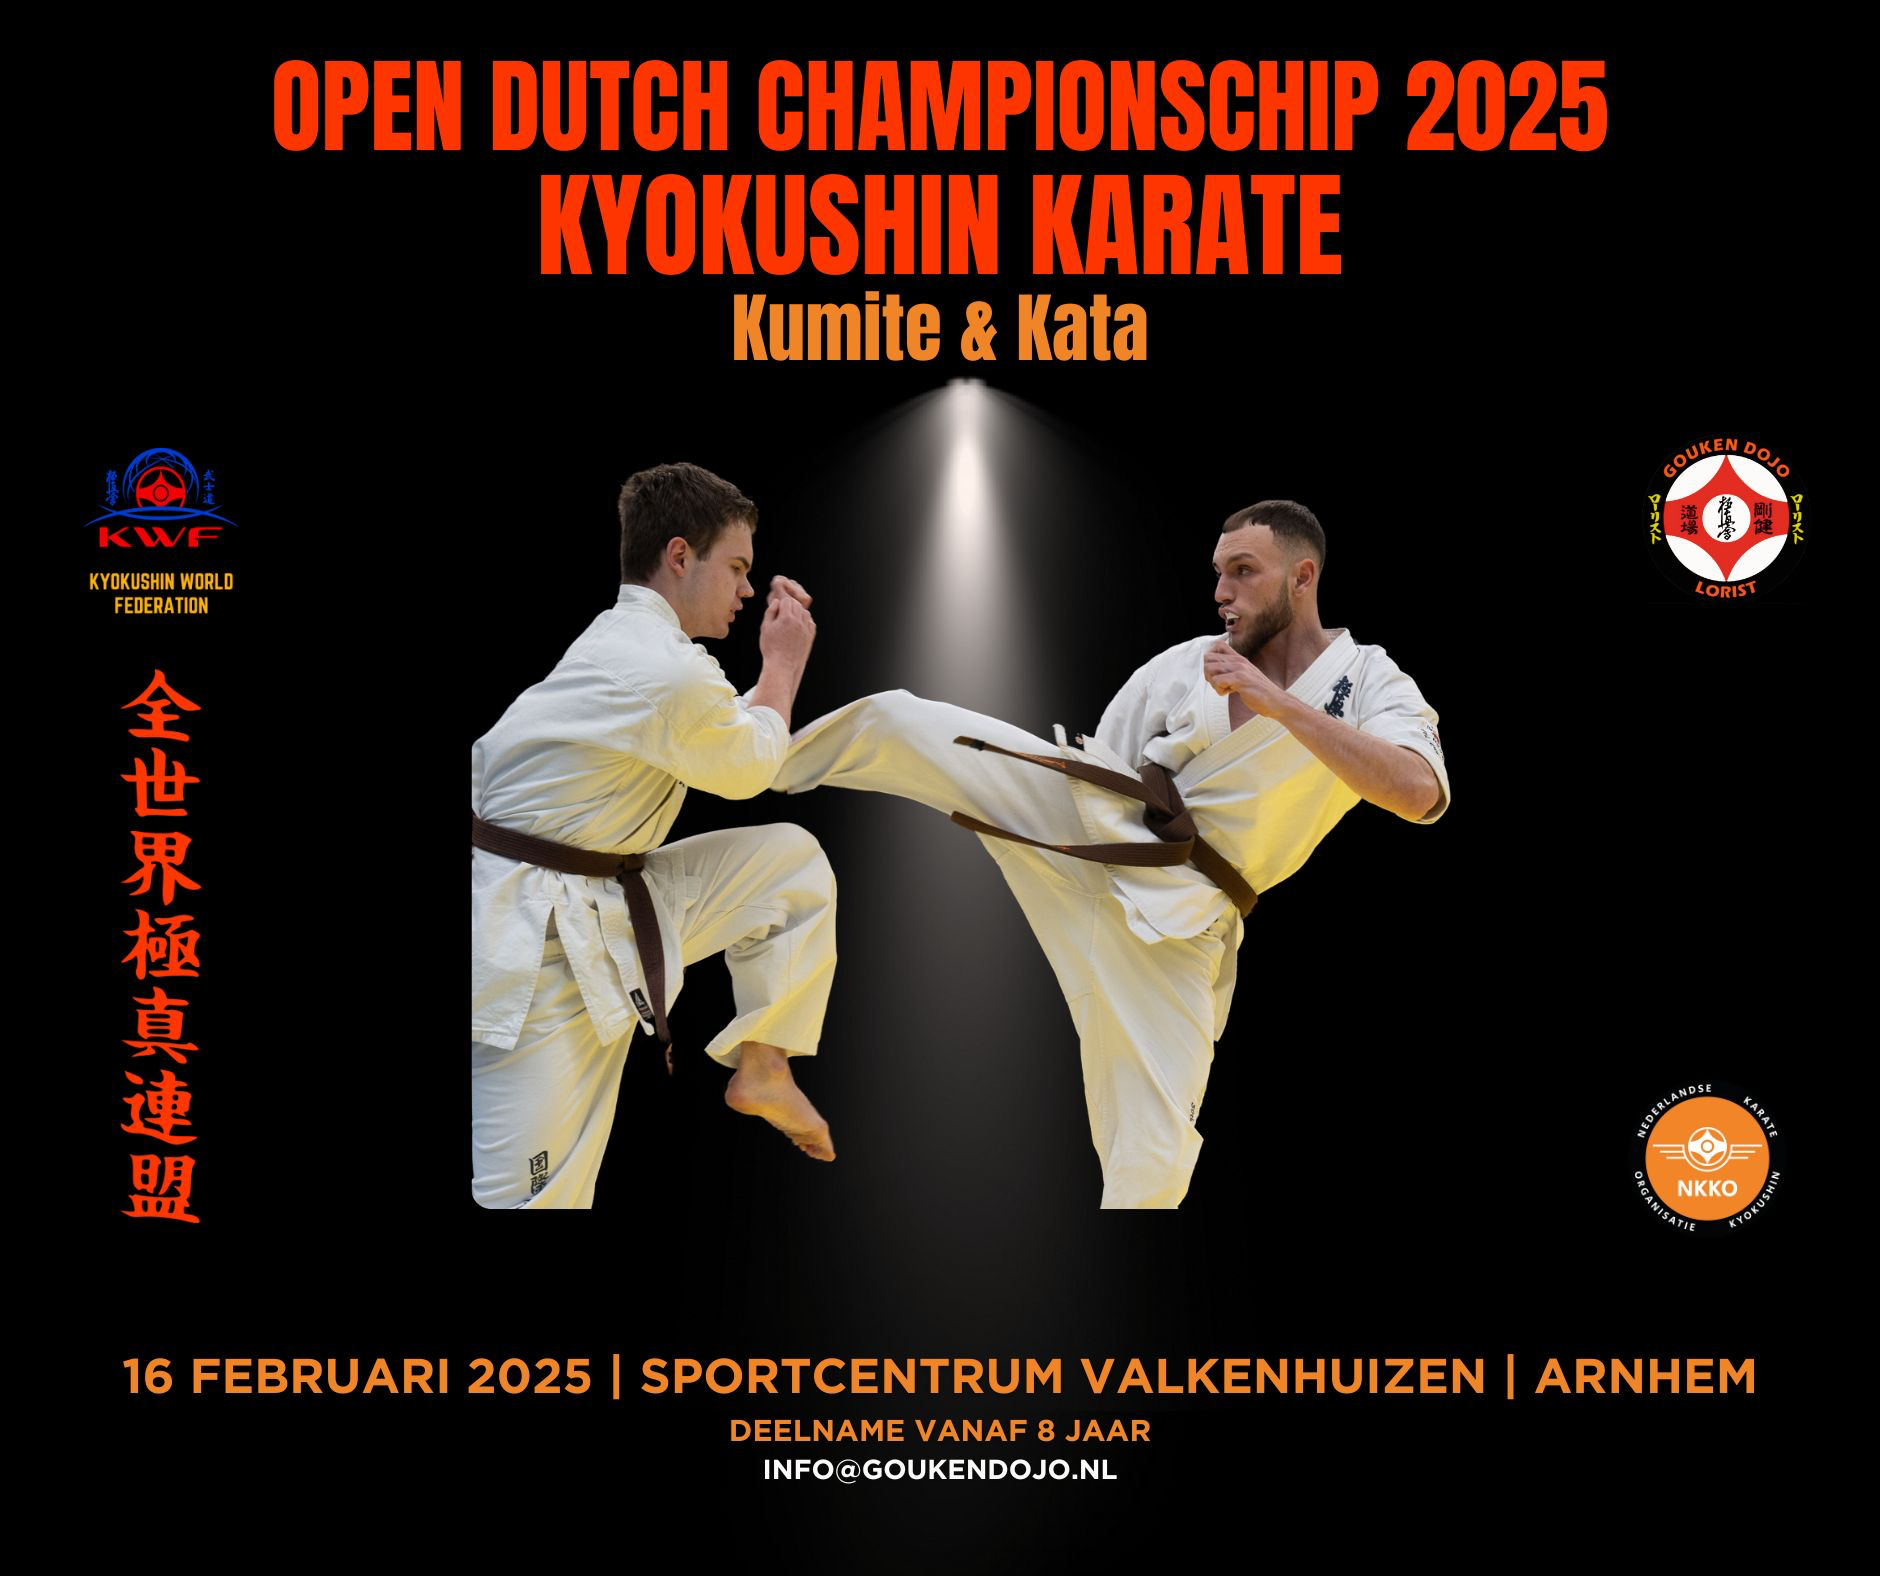 Open Dutch Championship 2025 Kyokushin Karate